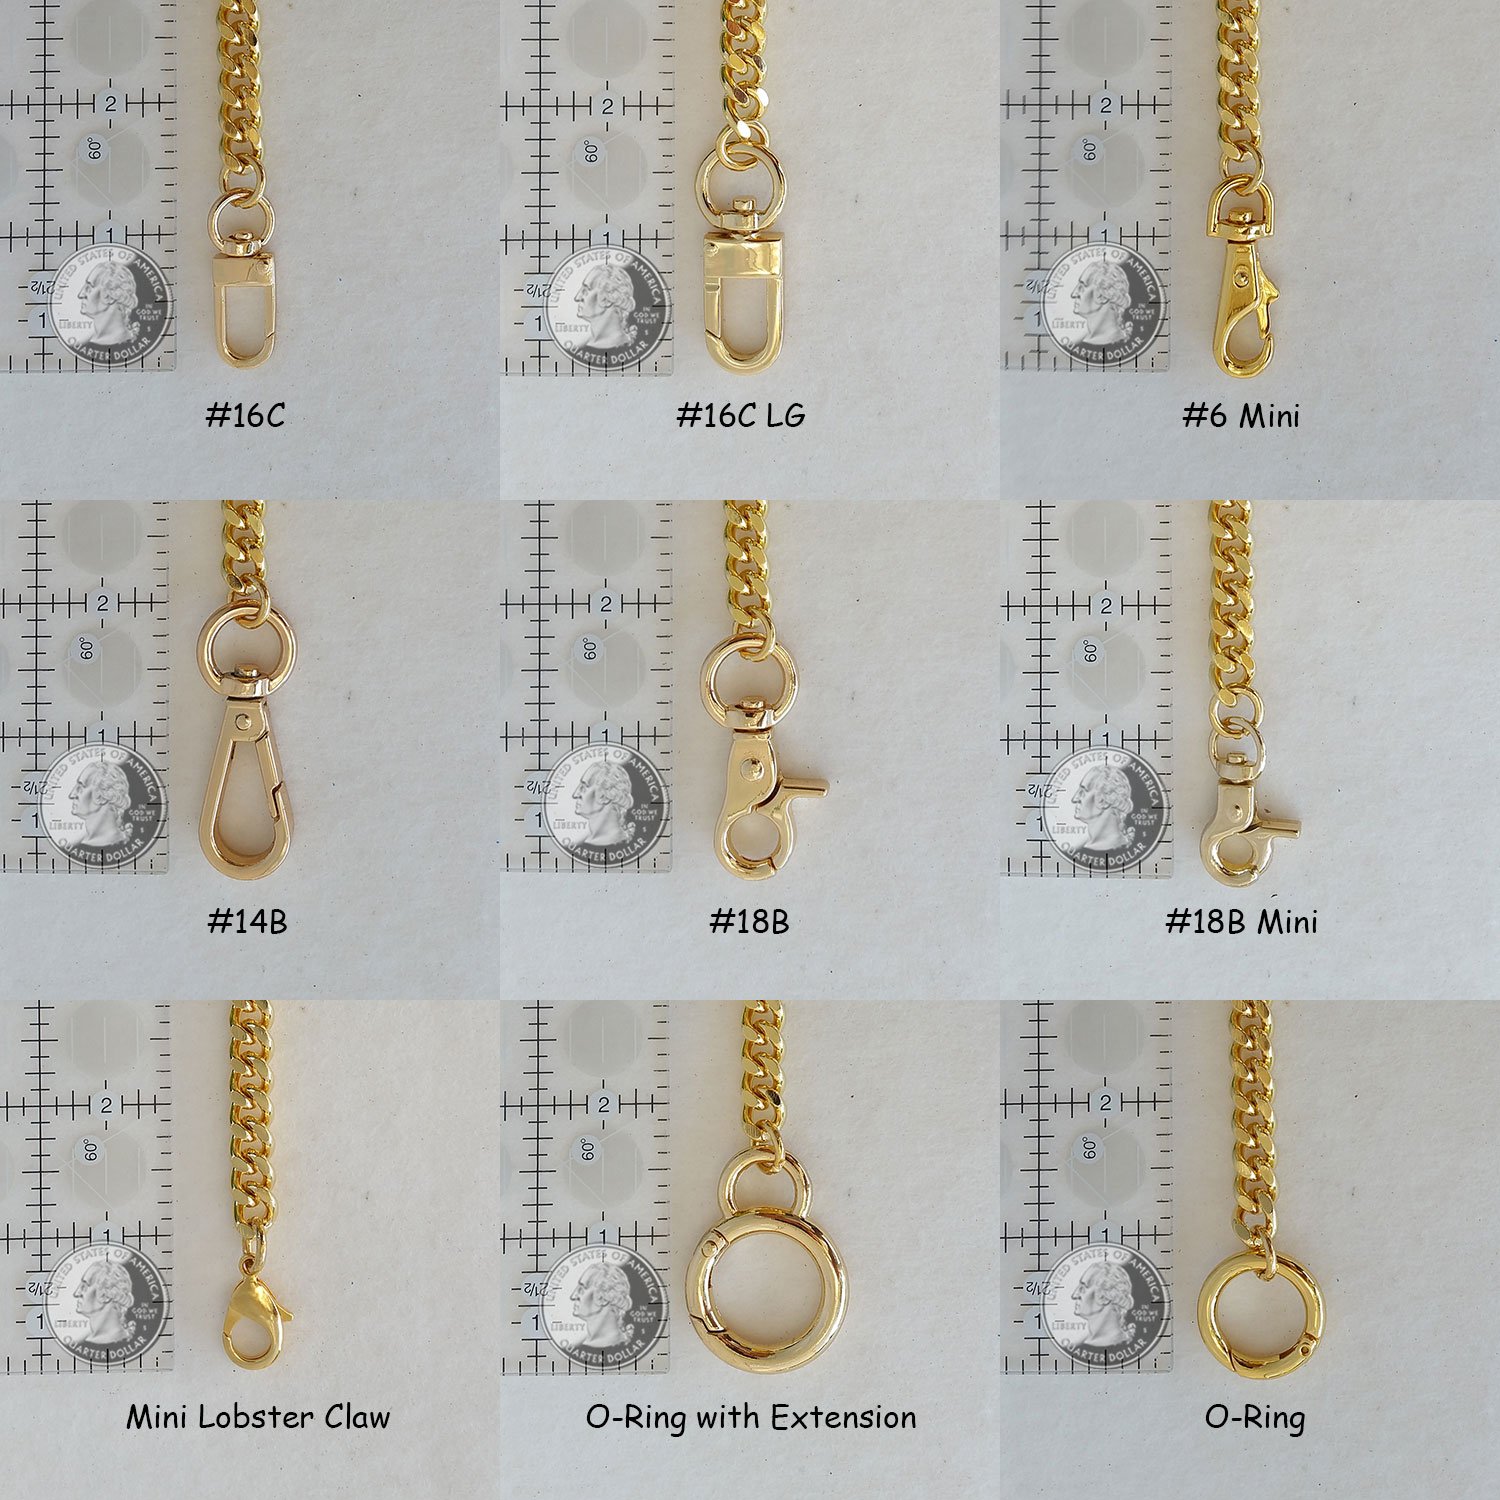 GOLD Chain Bag Strap - Thick Classy Curb w/ Diamond Cut Accents